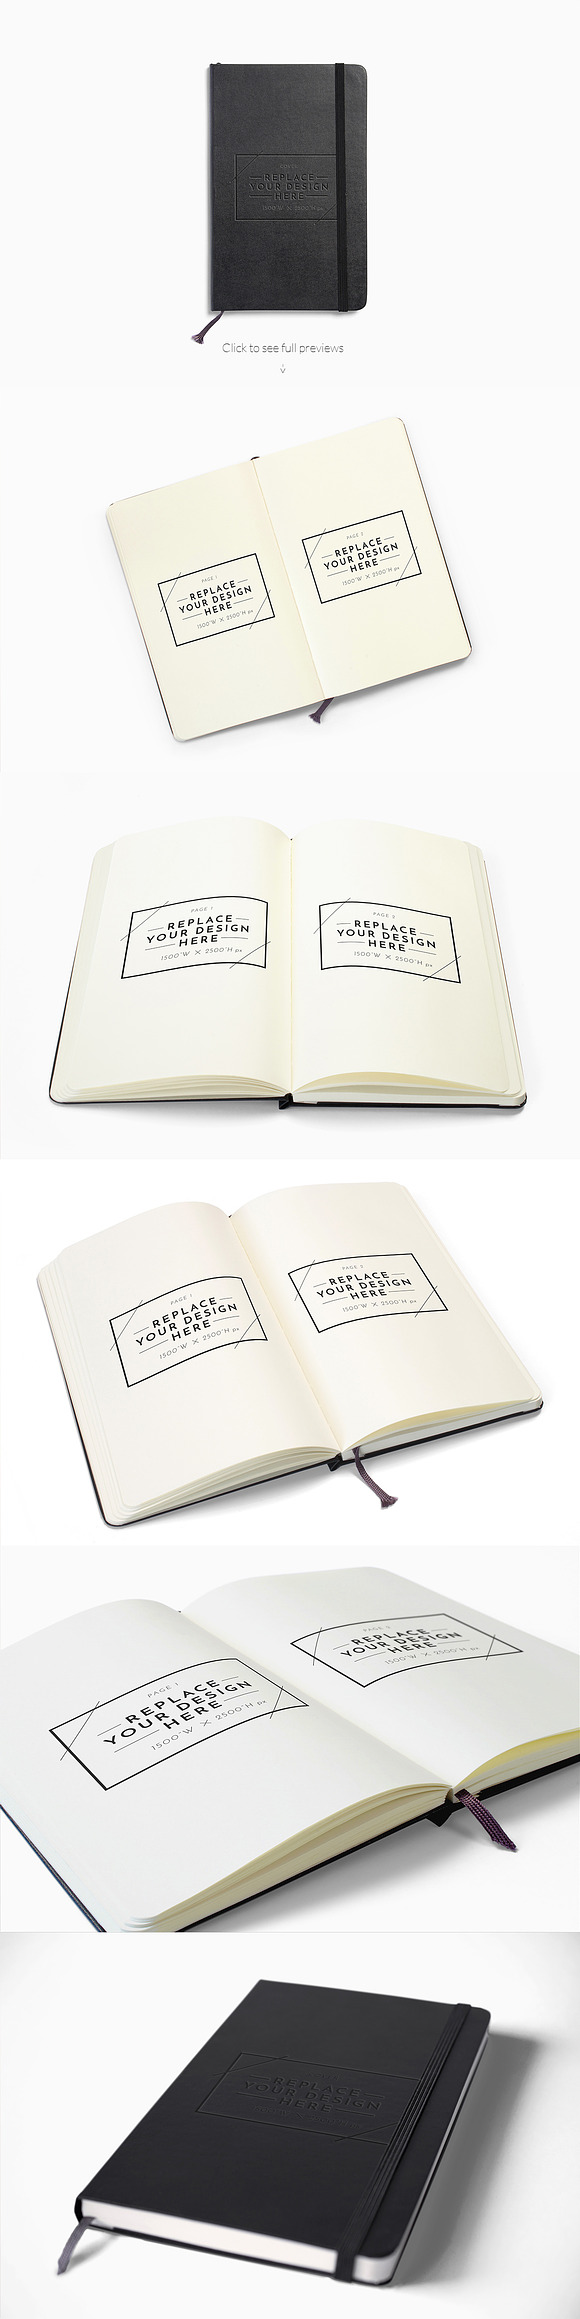 Sketchbook & Notebook Mockups in Print Mockups - product preview 2